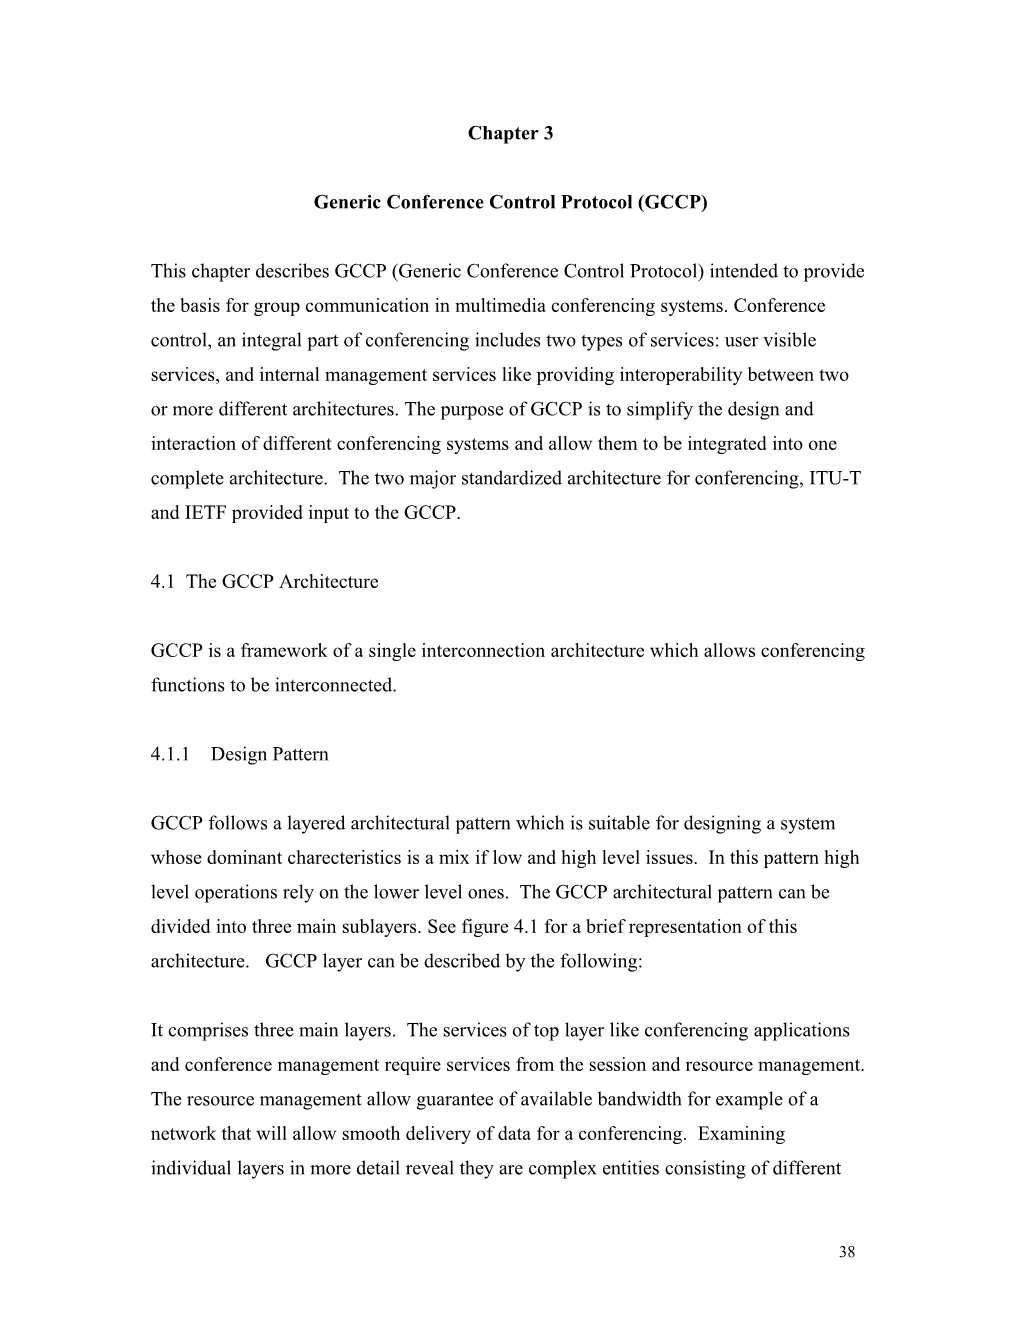 Generic Conference Control Protocol (GCCP)